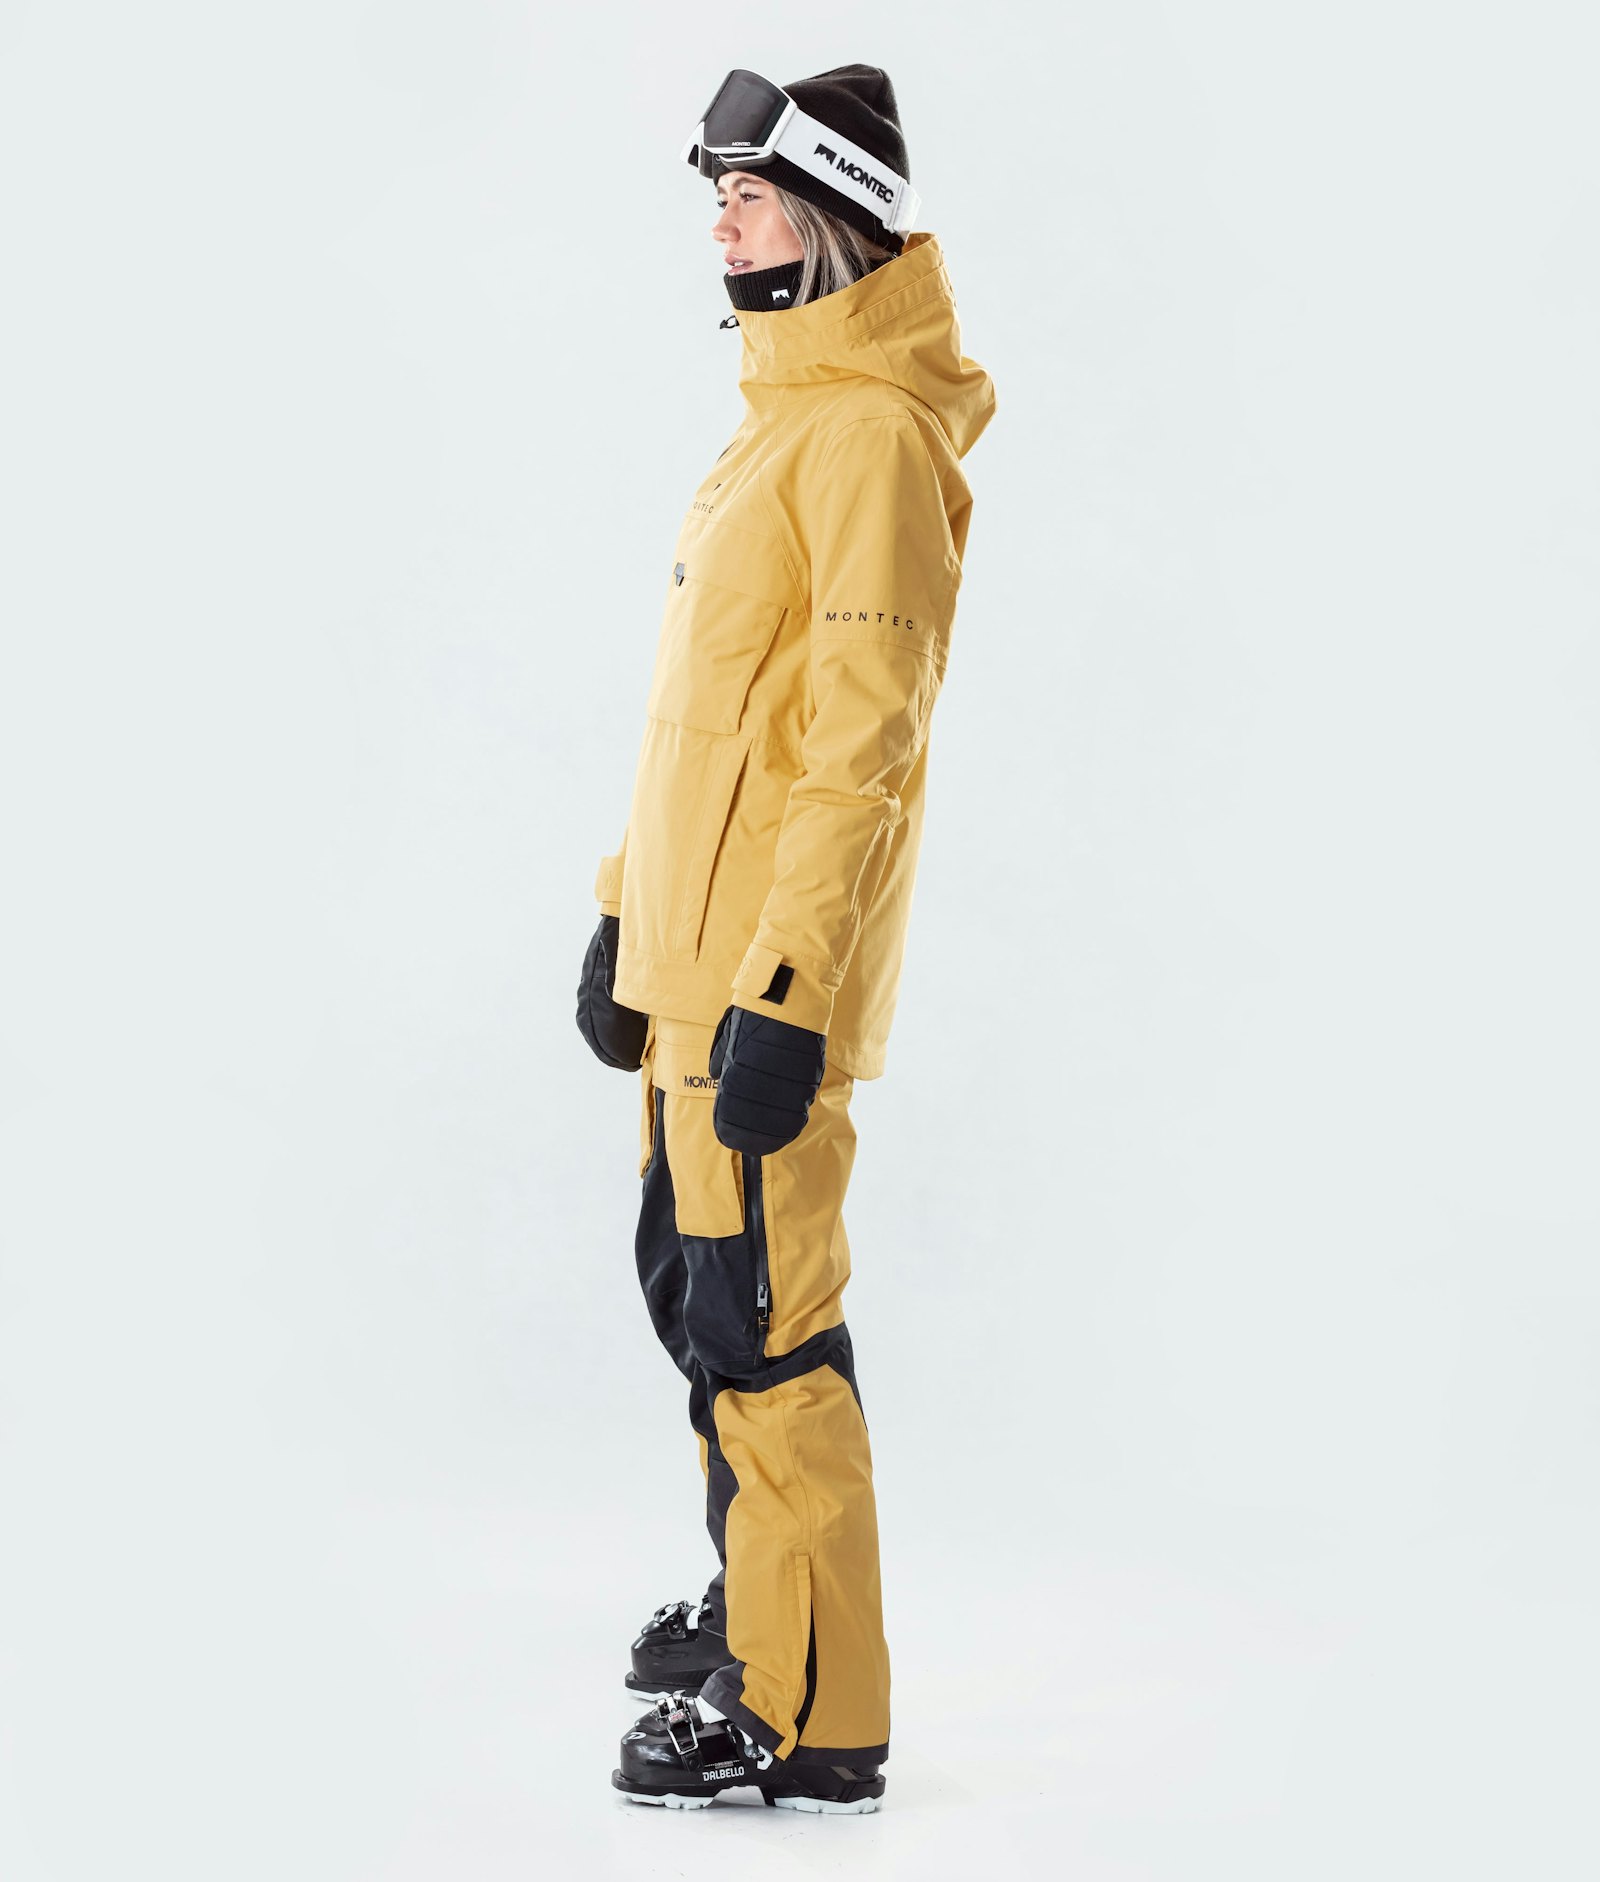 Dune W 2020 Chaqueta Esquí Mujer Yellow